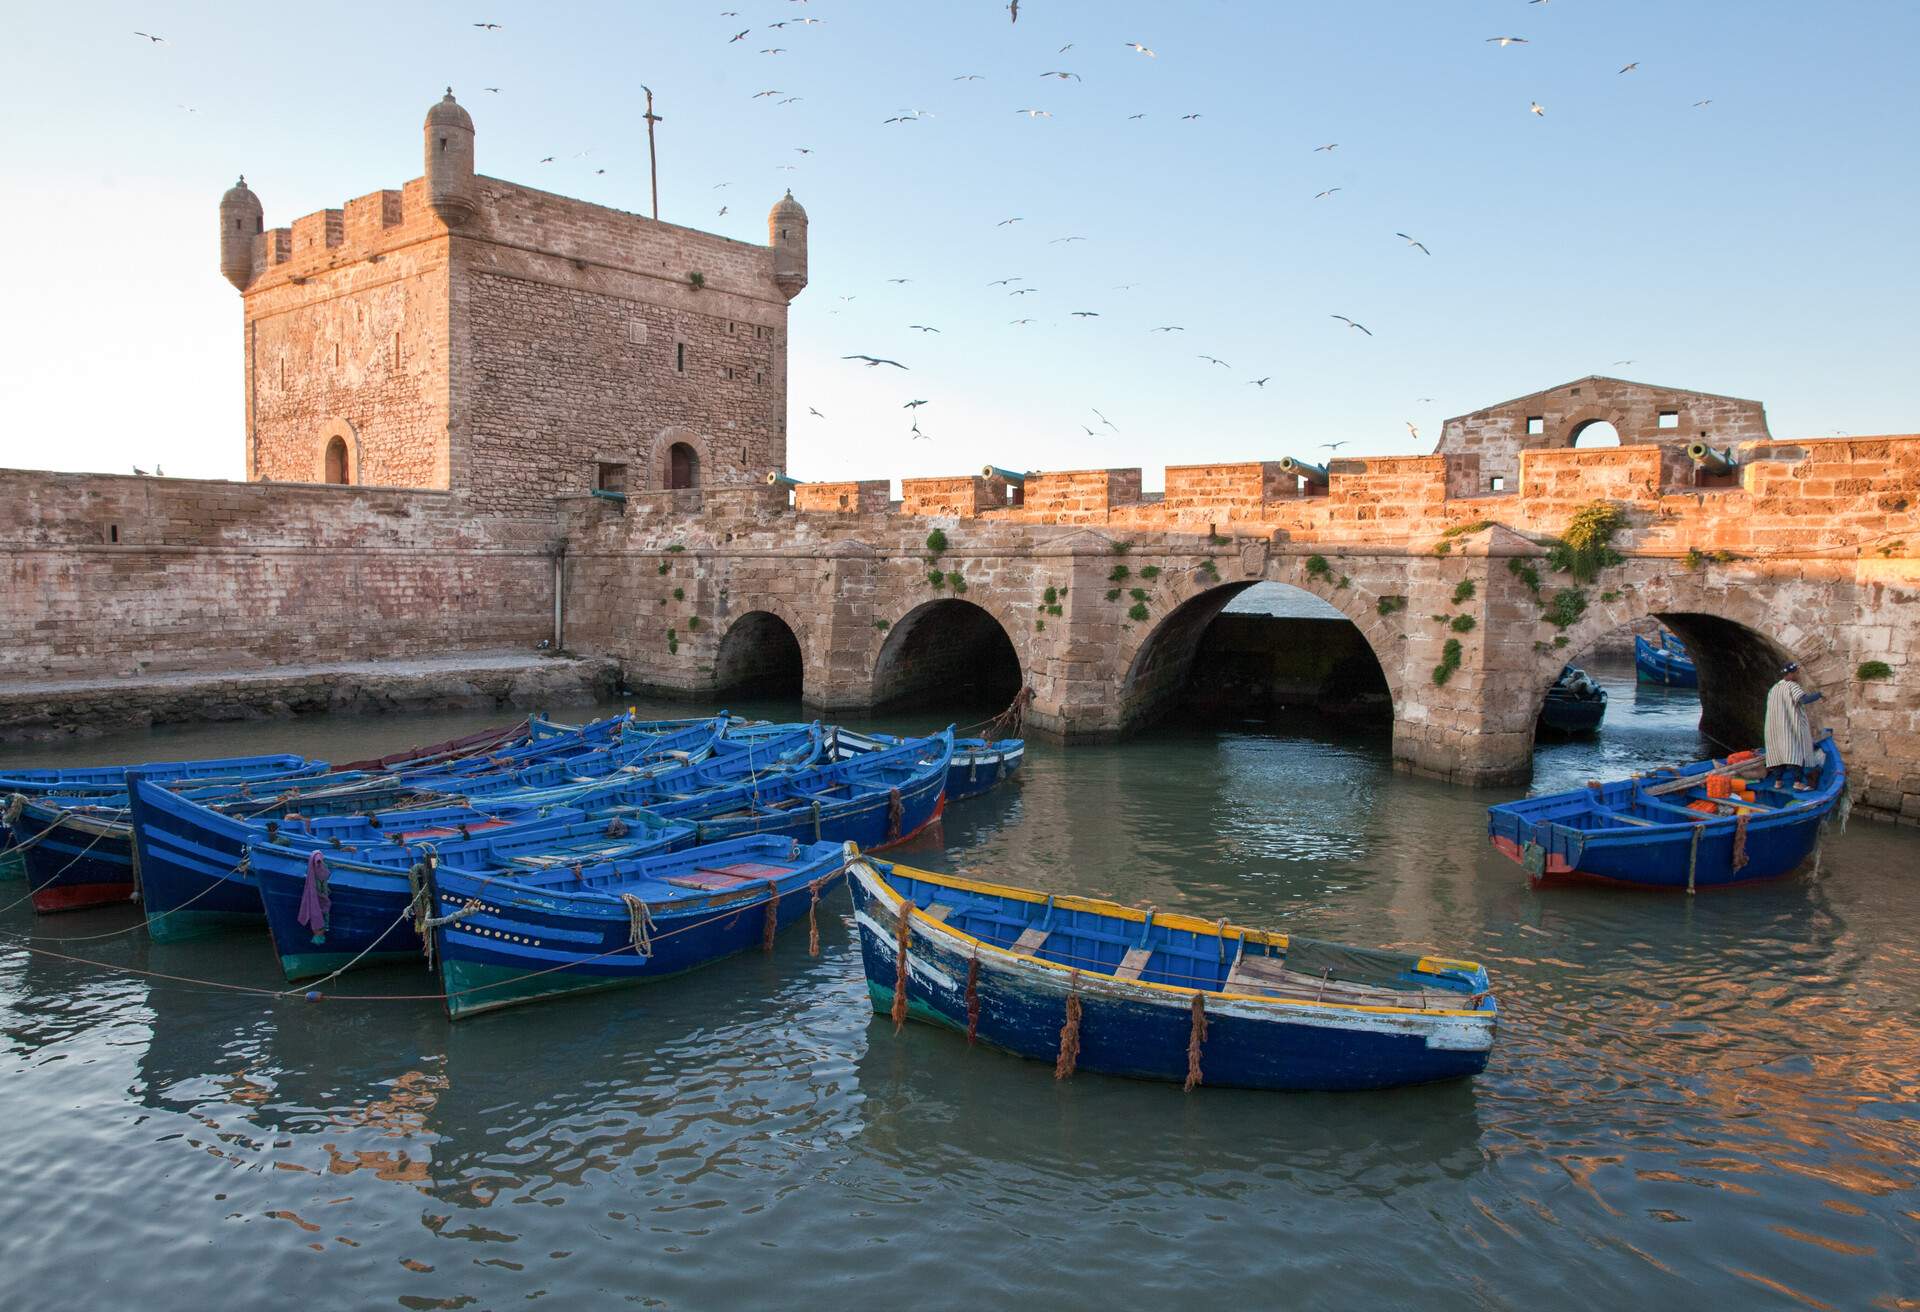 Boats docked in the Skala du port, Essaouira, Morocco.